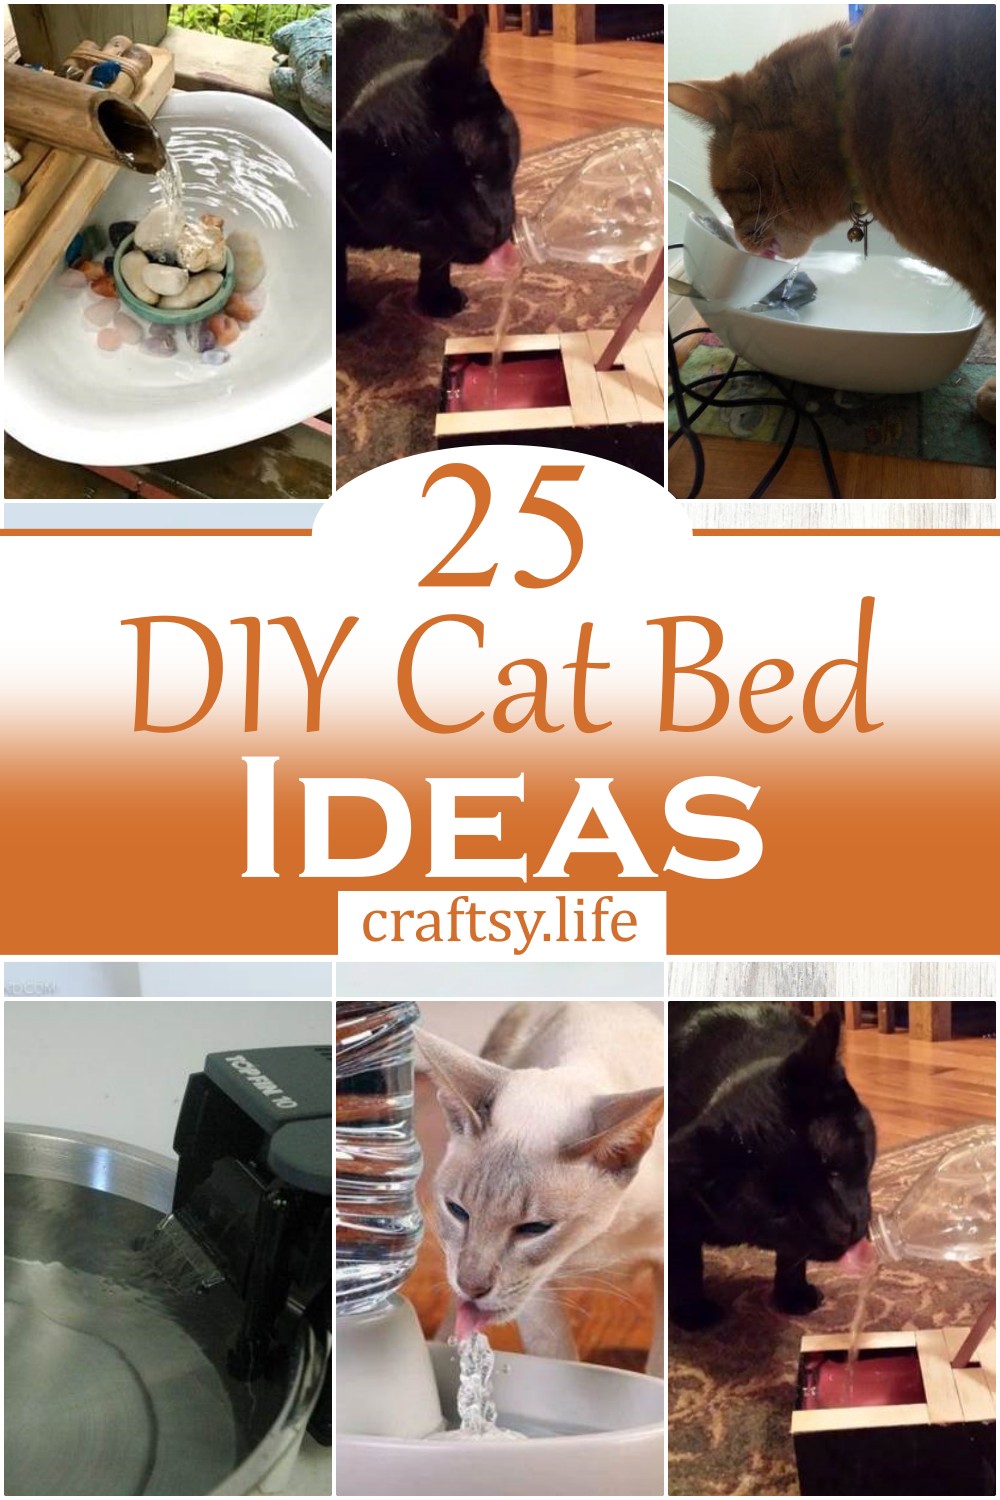 DIY Cat Bed Ideas